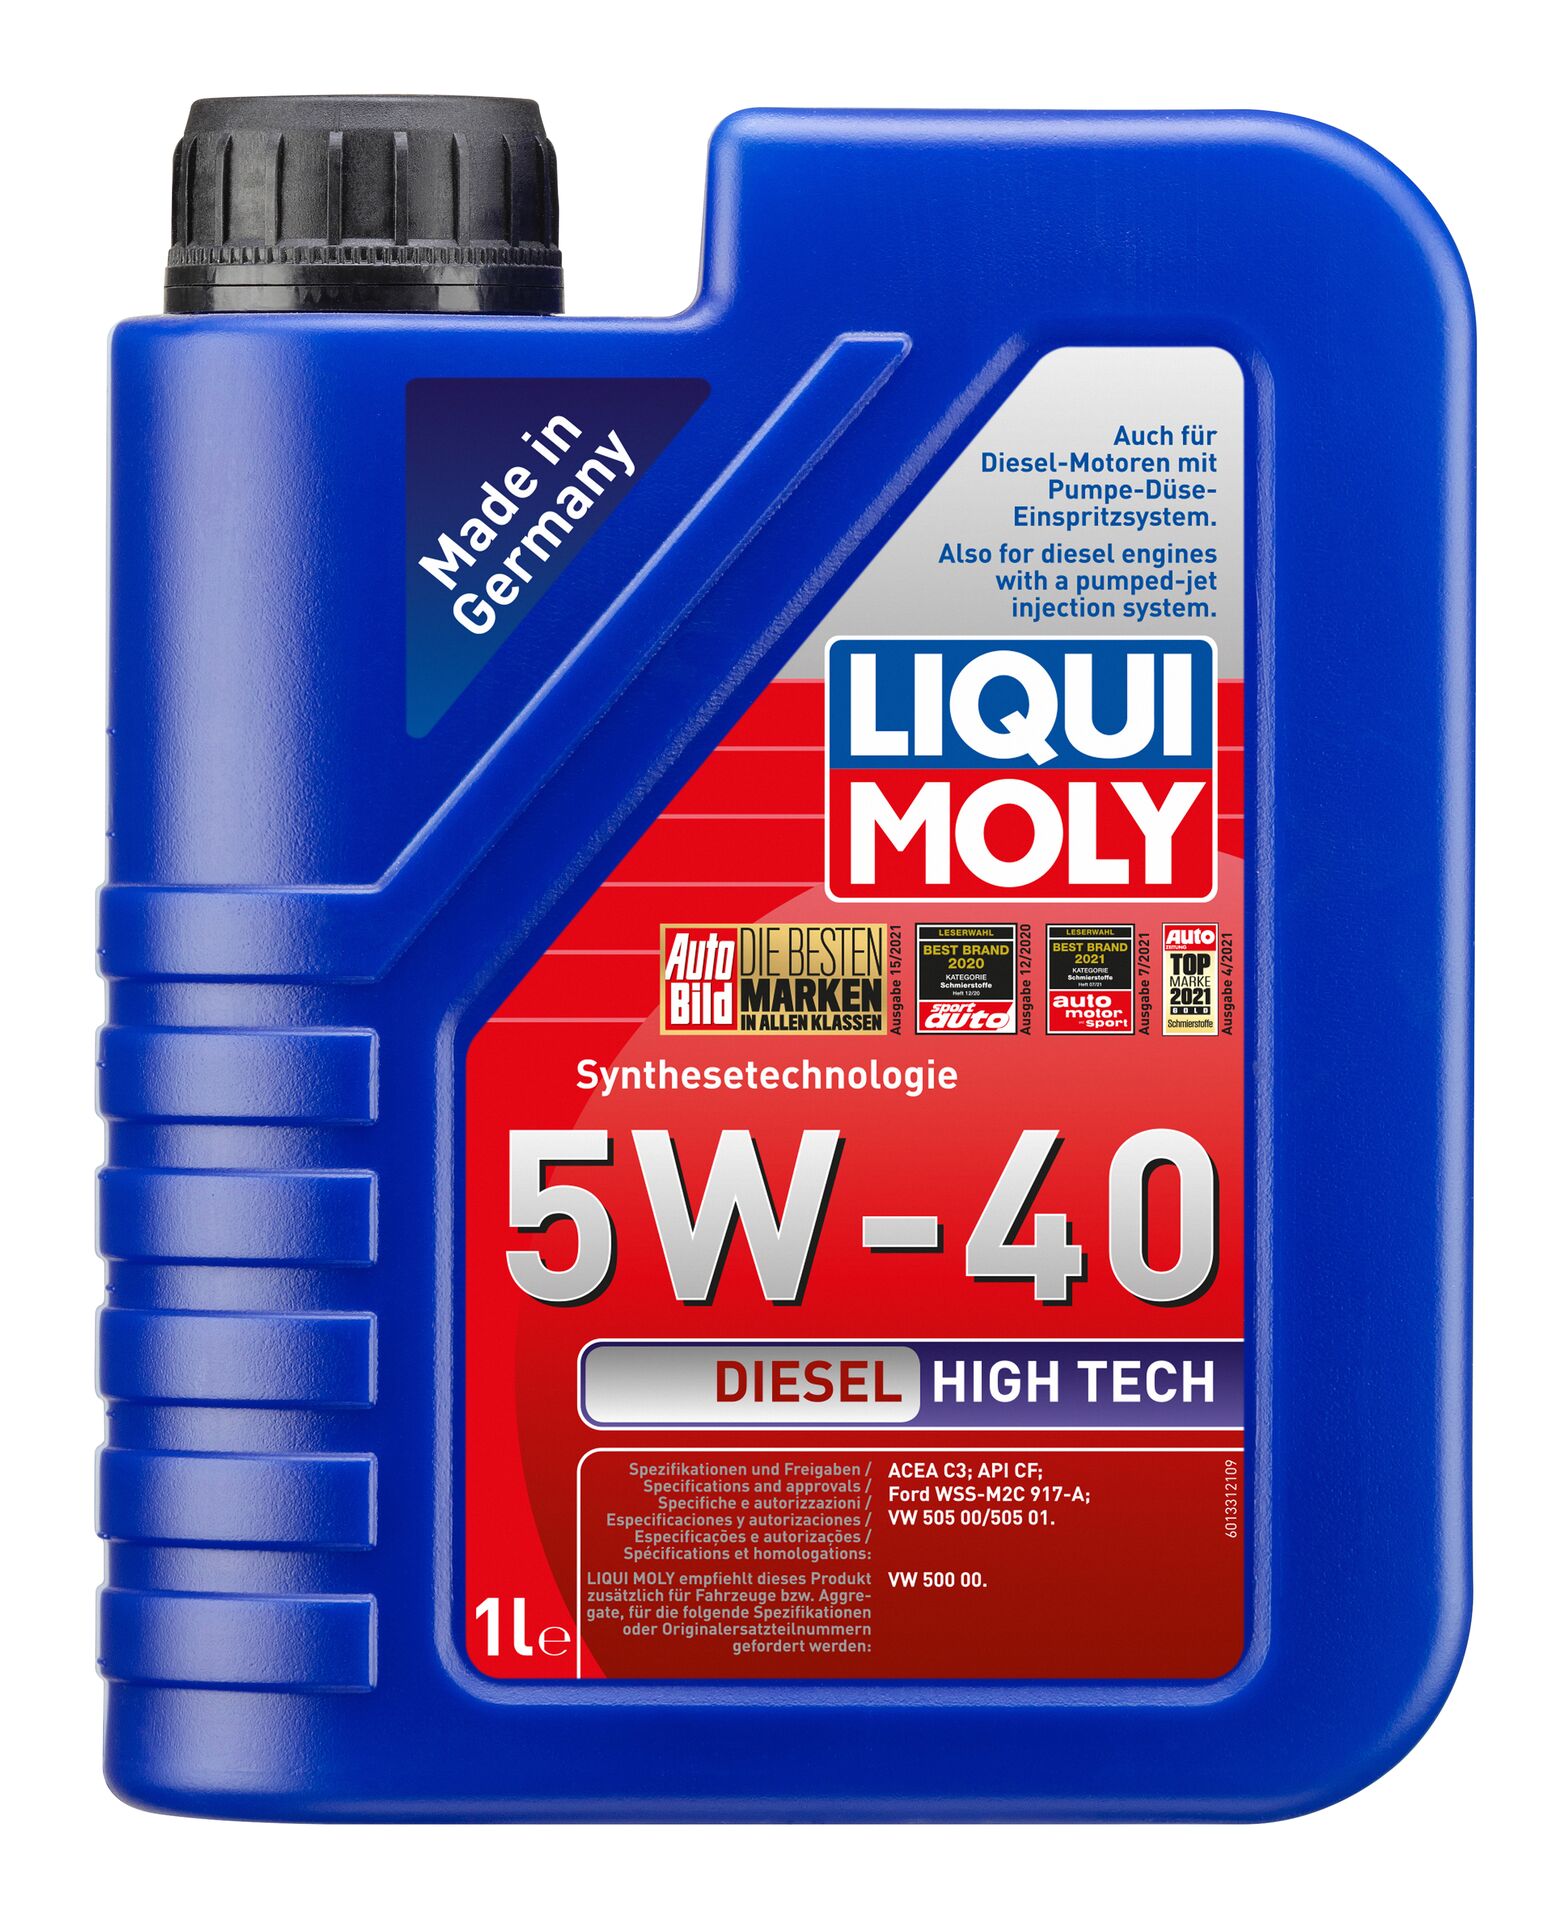 Liqui Moly Diesel High Tech 5W-40 Leichtlauf Motoröl Motorenöl 1L